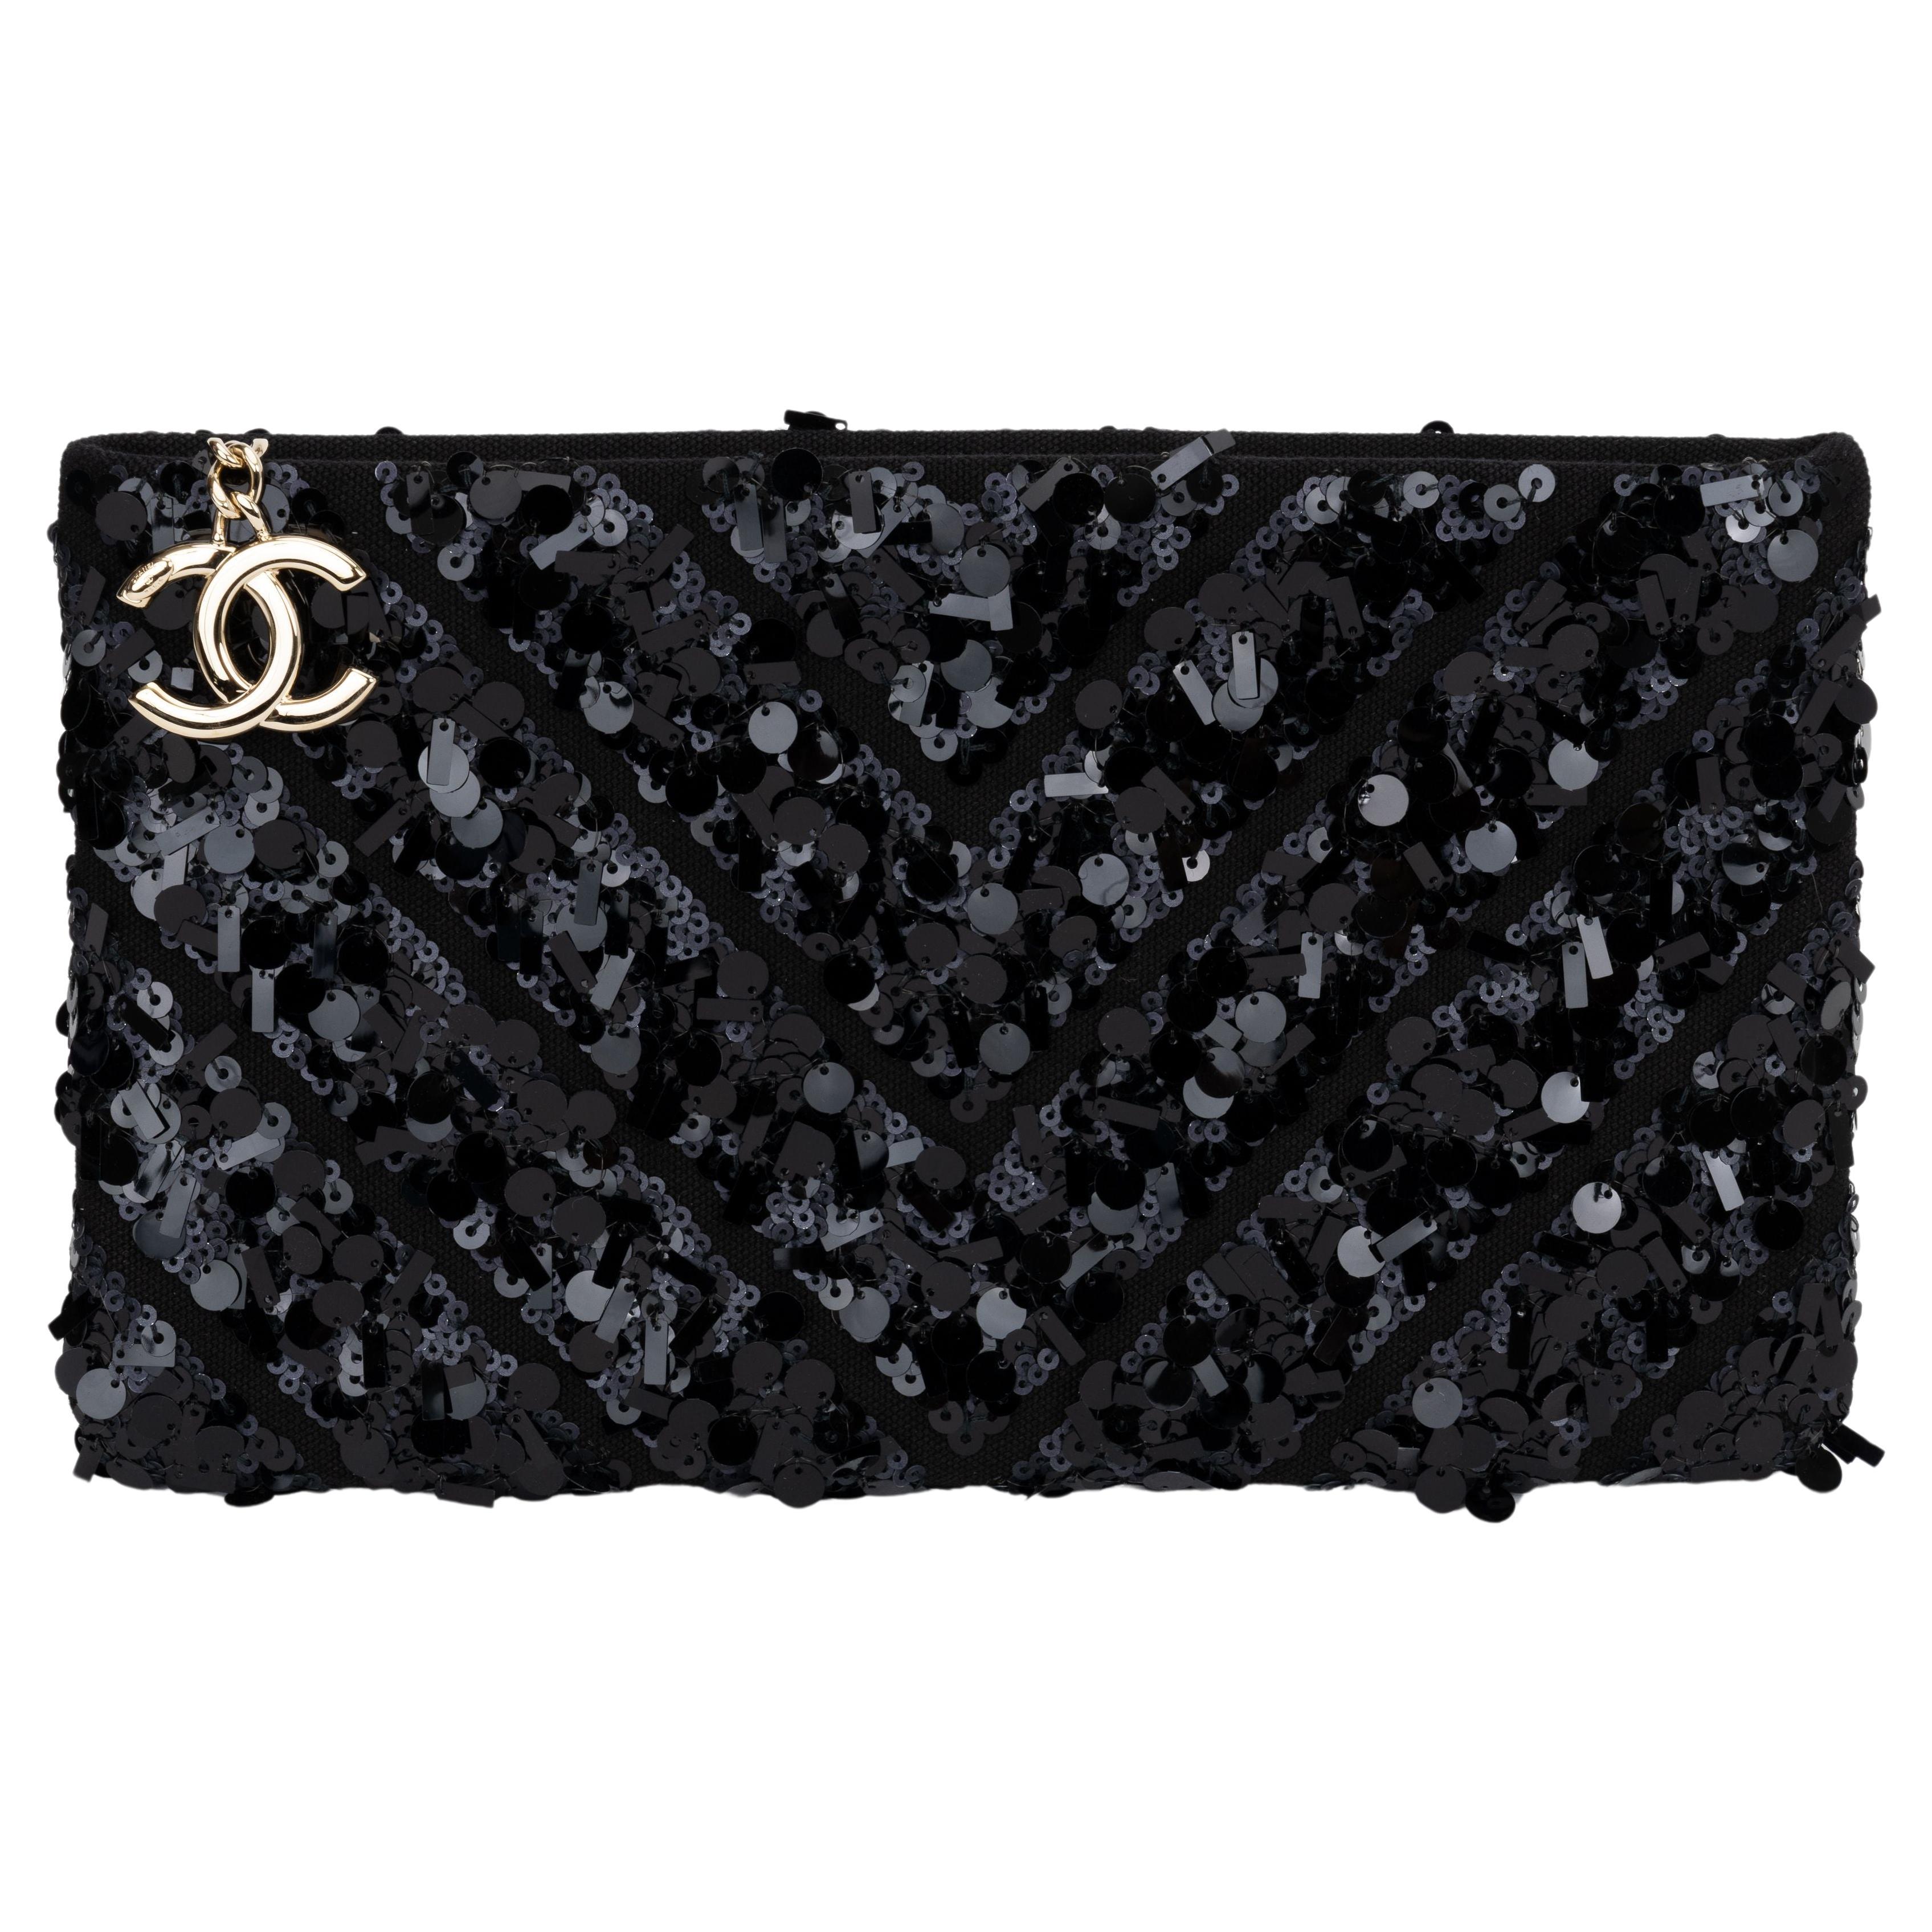 Chanel Black Sequins Evening Clutch